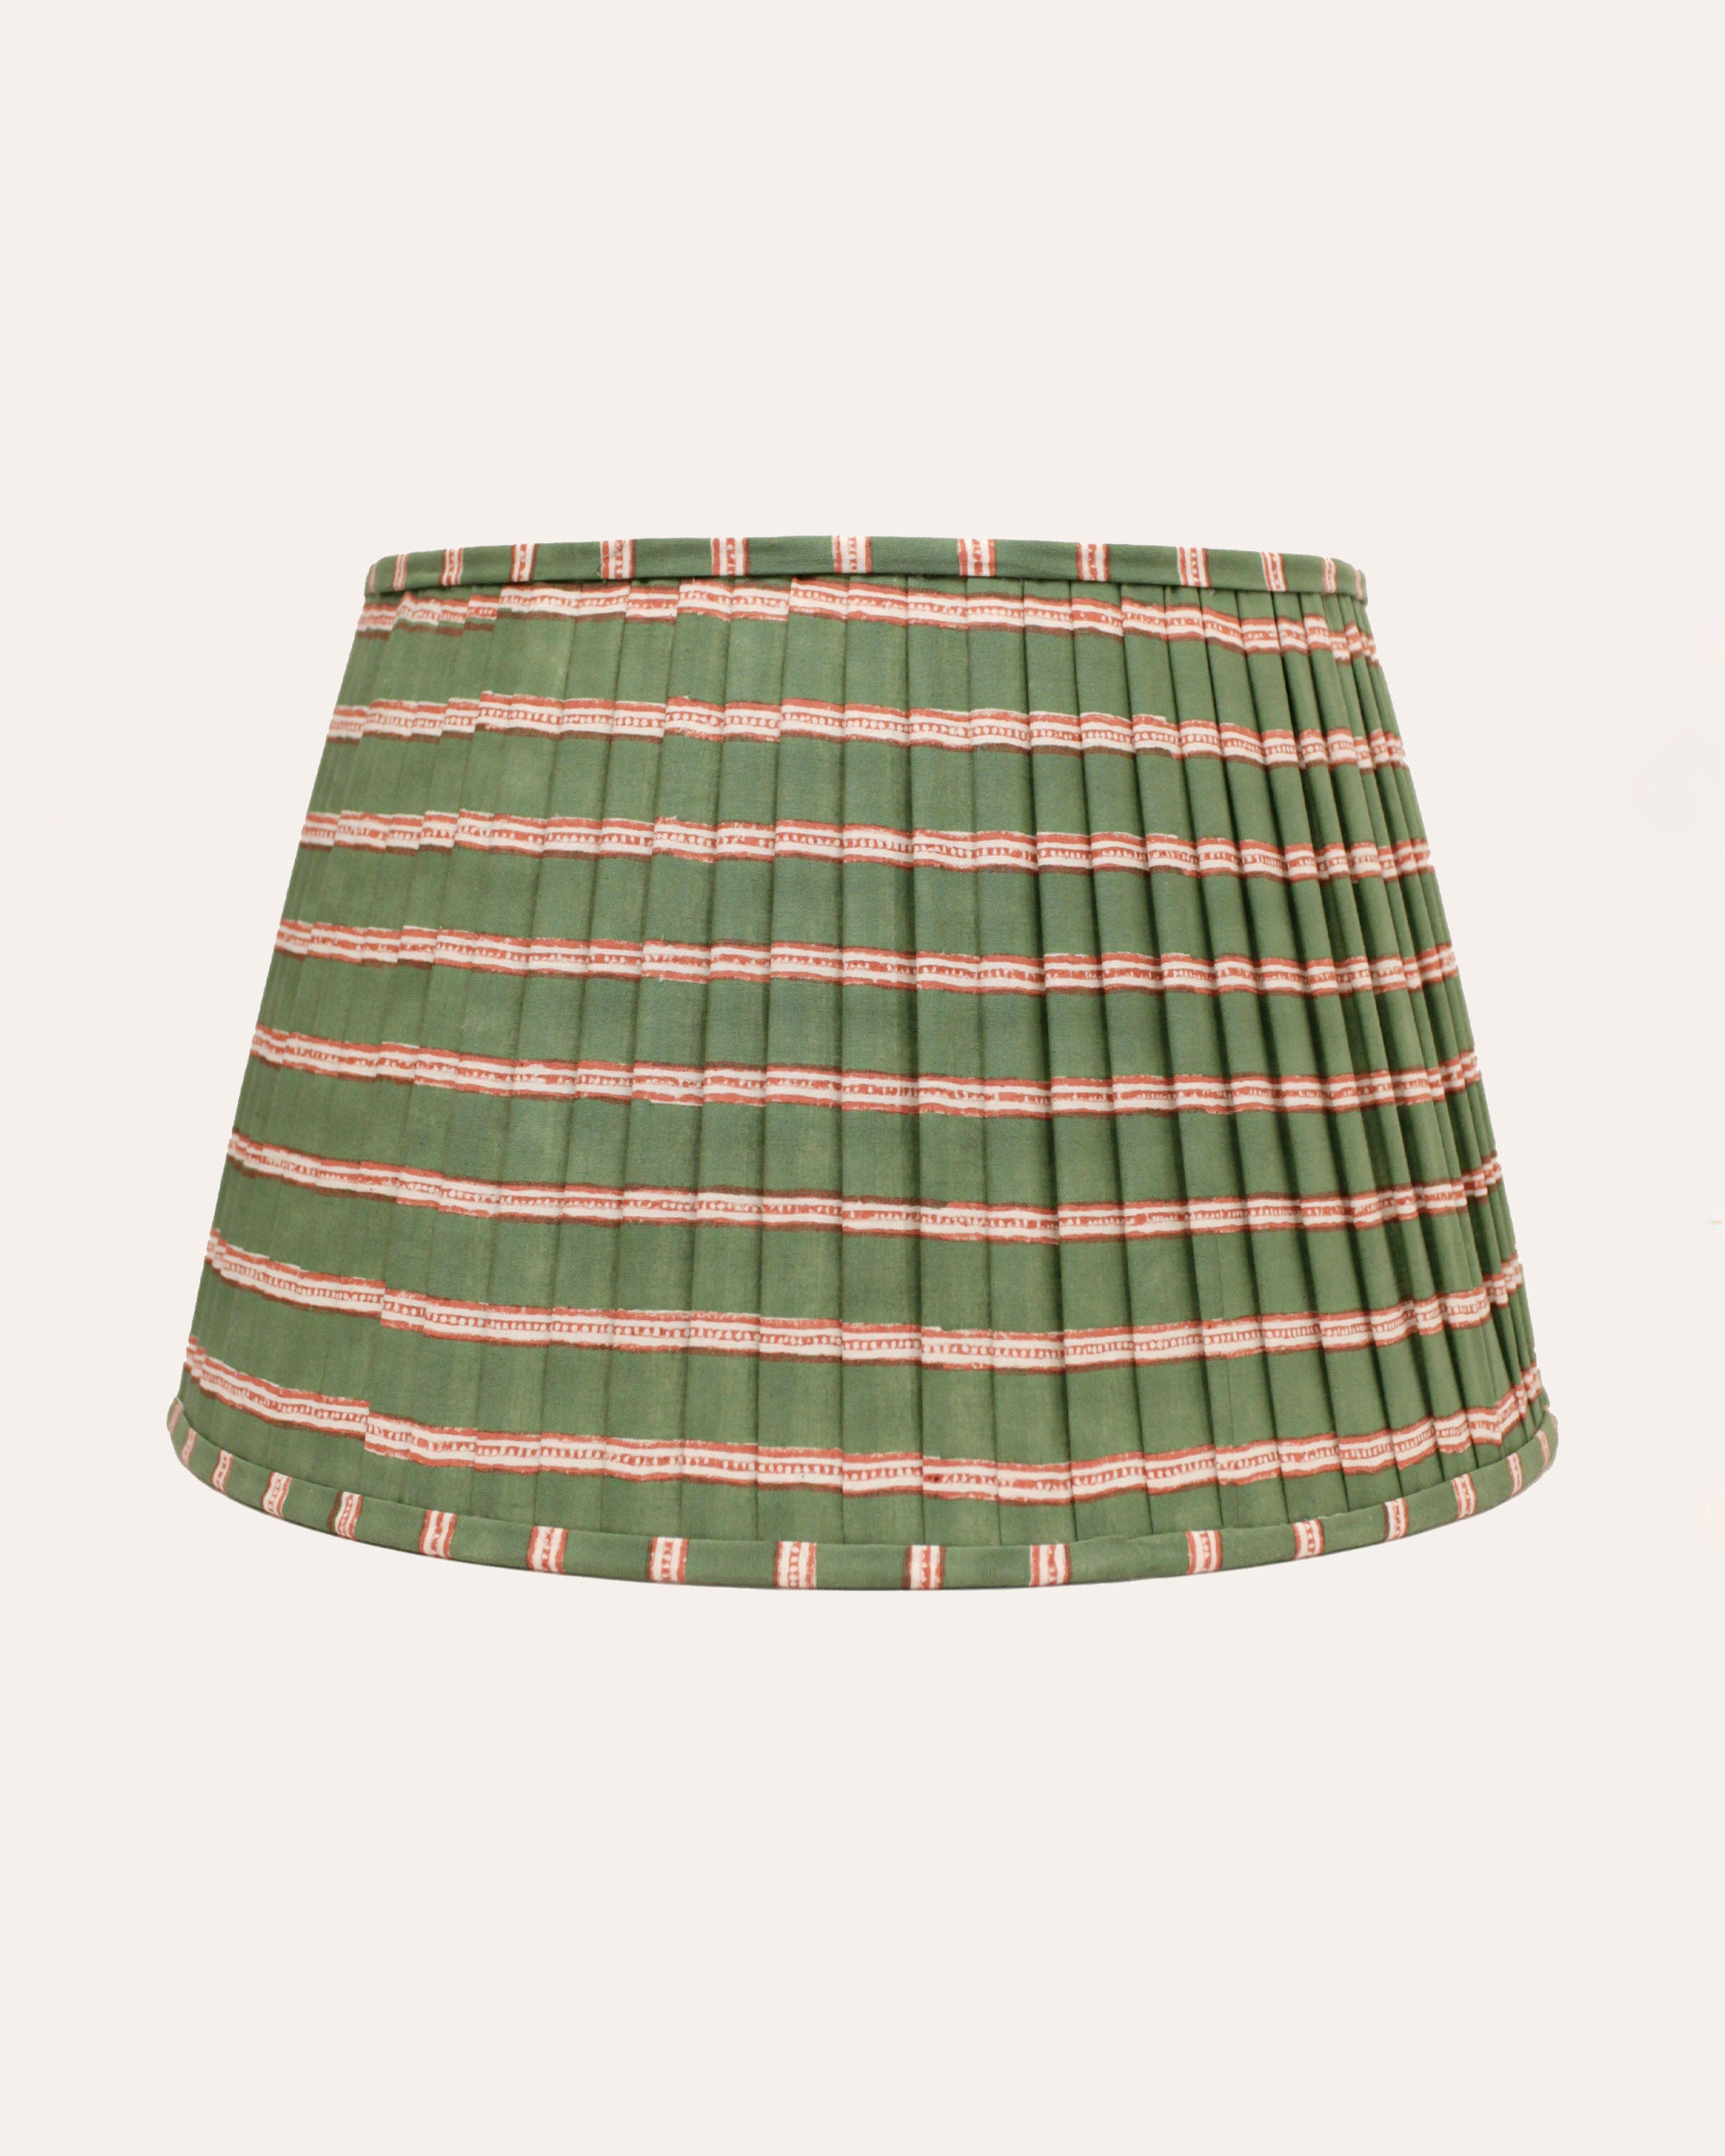 Edo Stripe Block Printed Lampshade - Moss Green & Pink